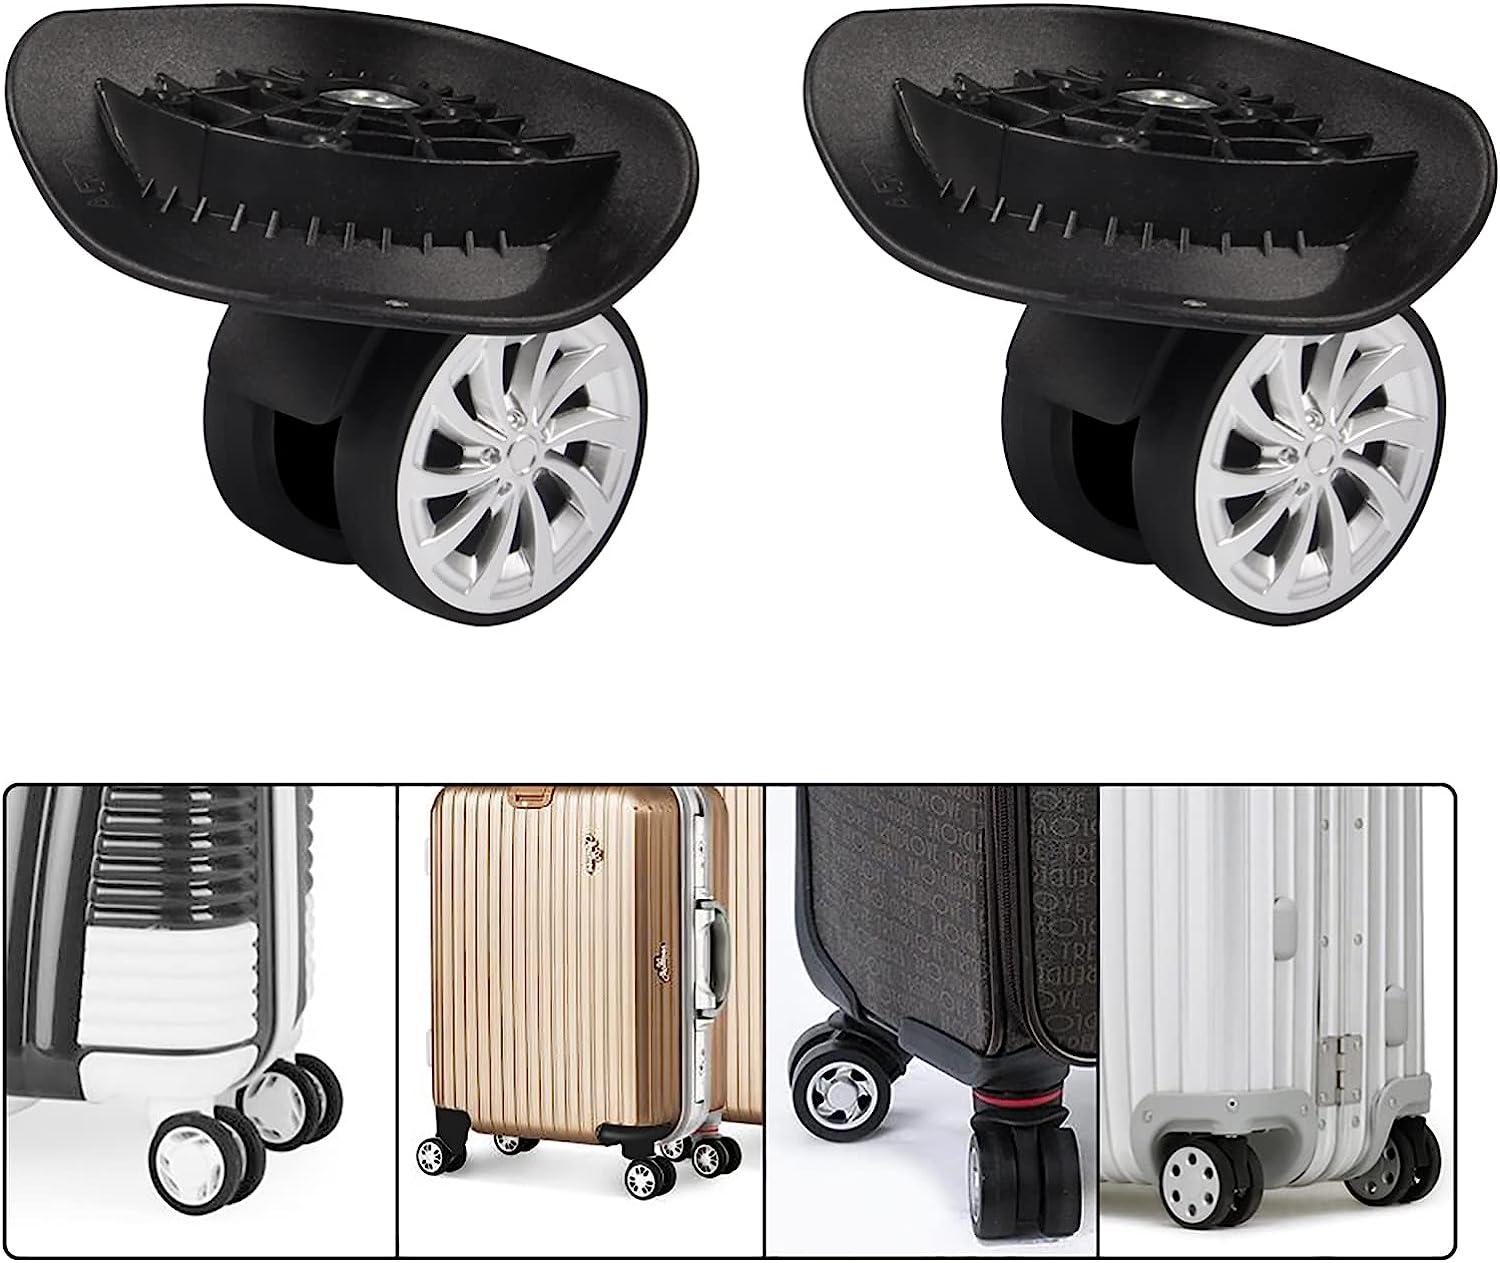 Luggage Suitcase Wheels,Swivel Wheel Replacement Luggage Travel Suitcase  Wheels Plastic Bearings Repair Set for Luggage Kits Pack of 2